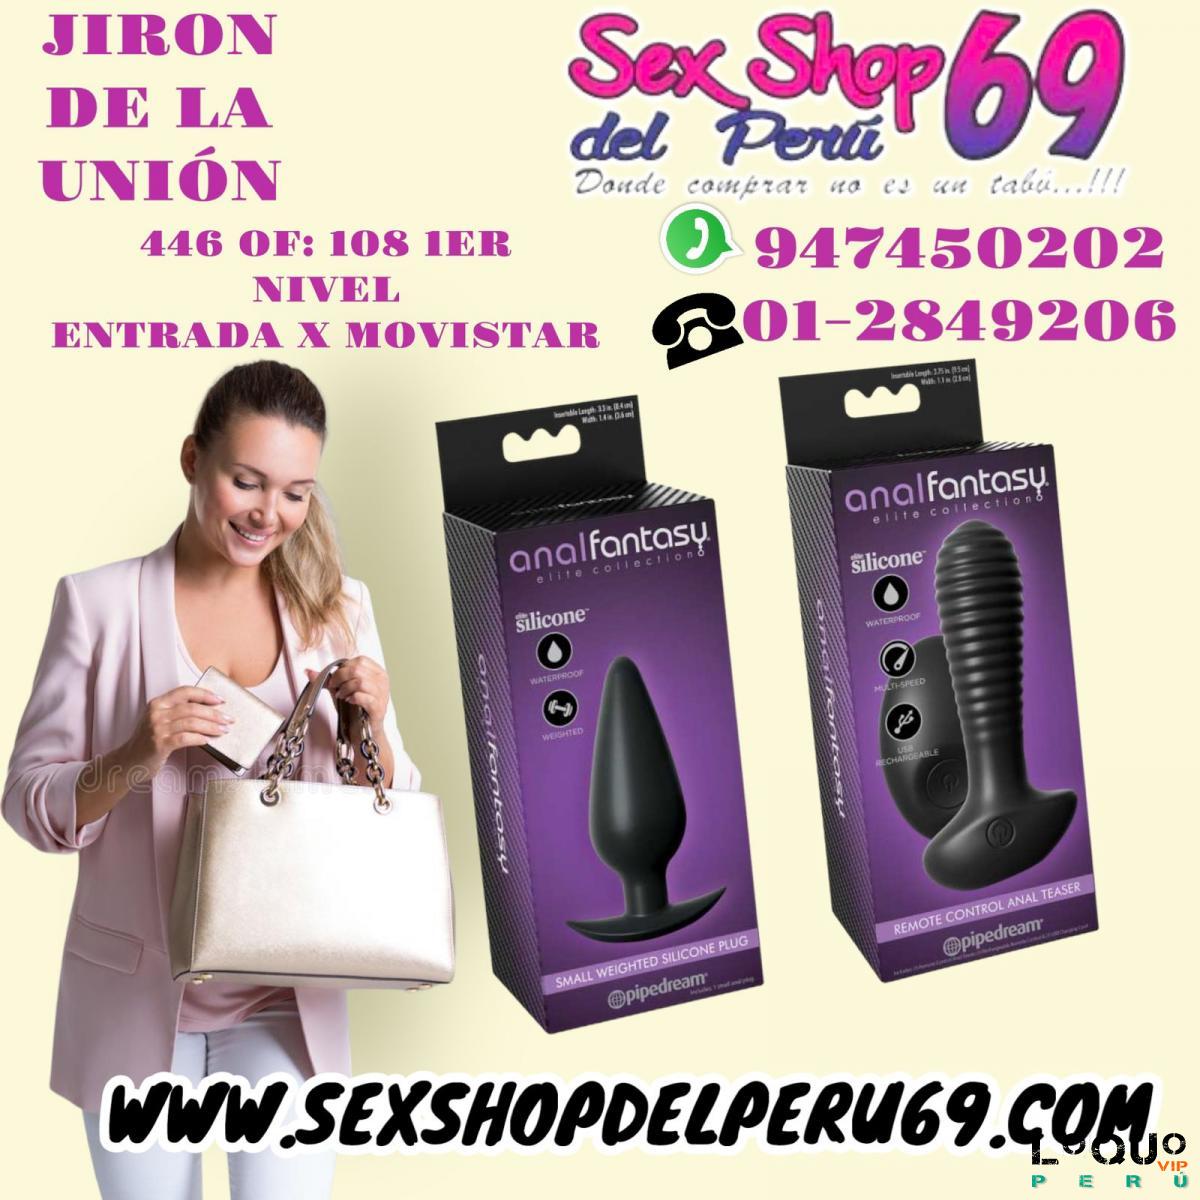 Sex Shop Arequipa: anal fantasy ++ plug silicona clinica